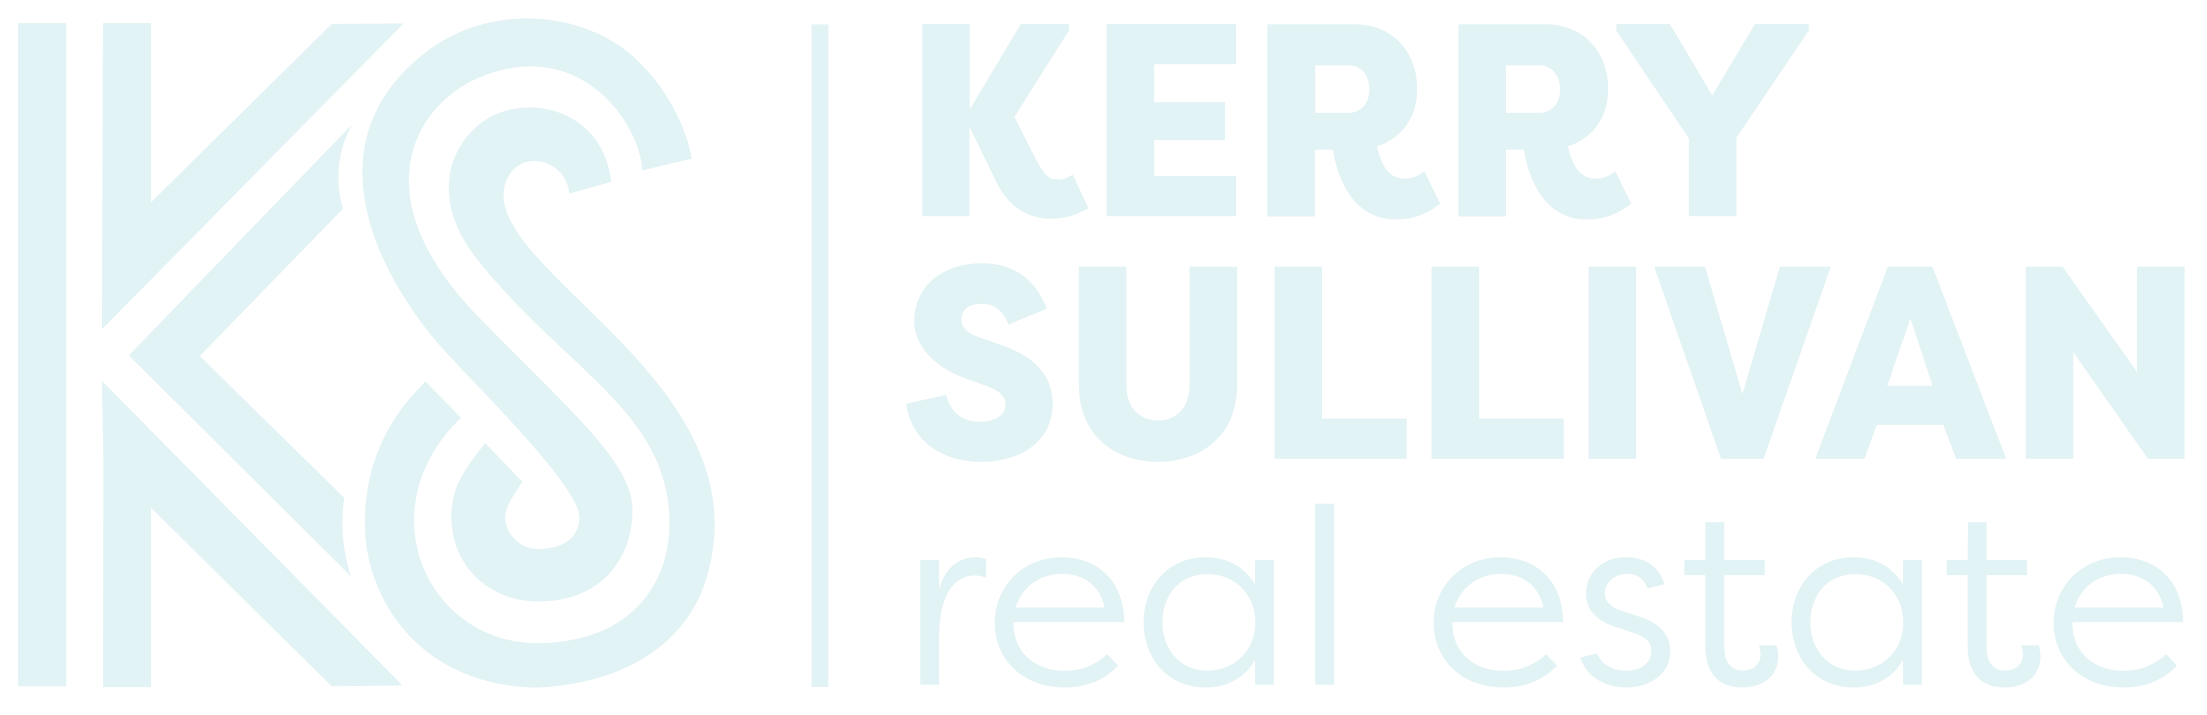 Kerry Sullivan Real Estate